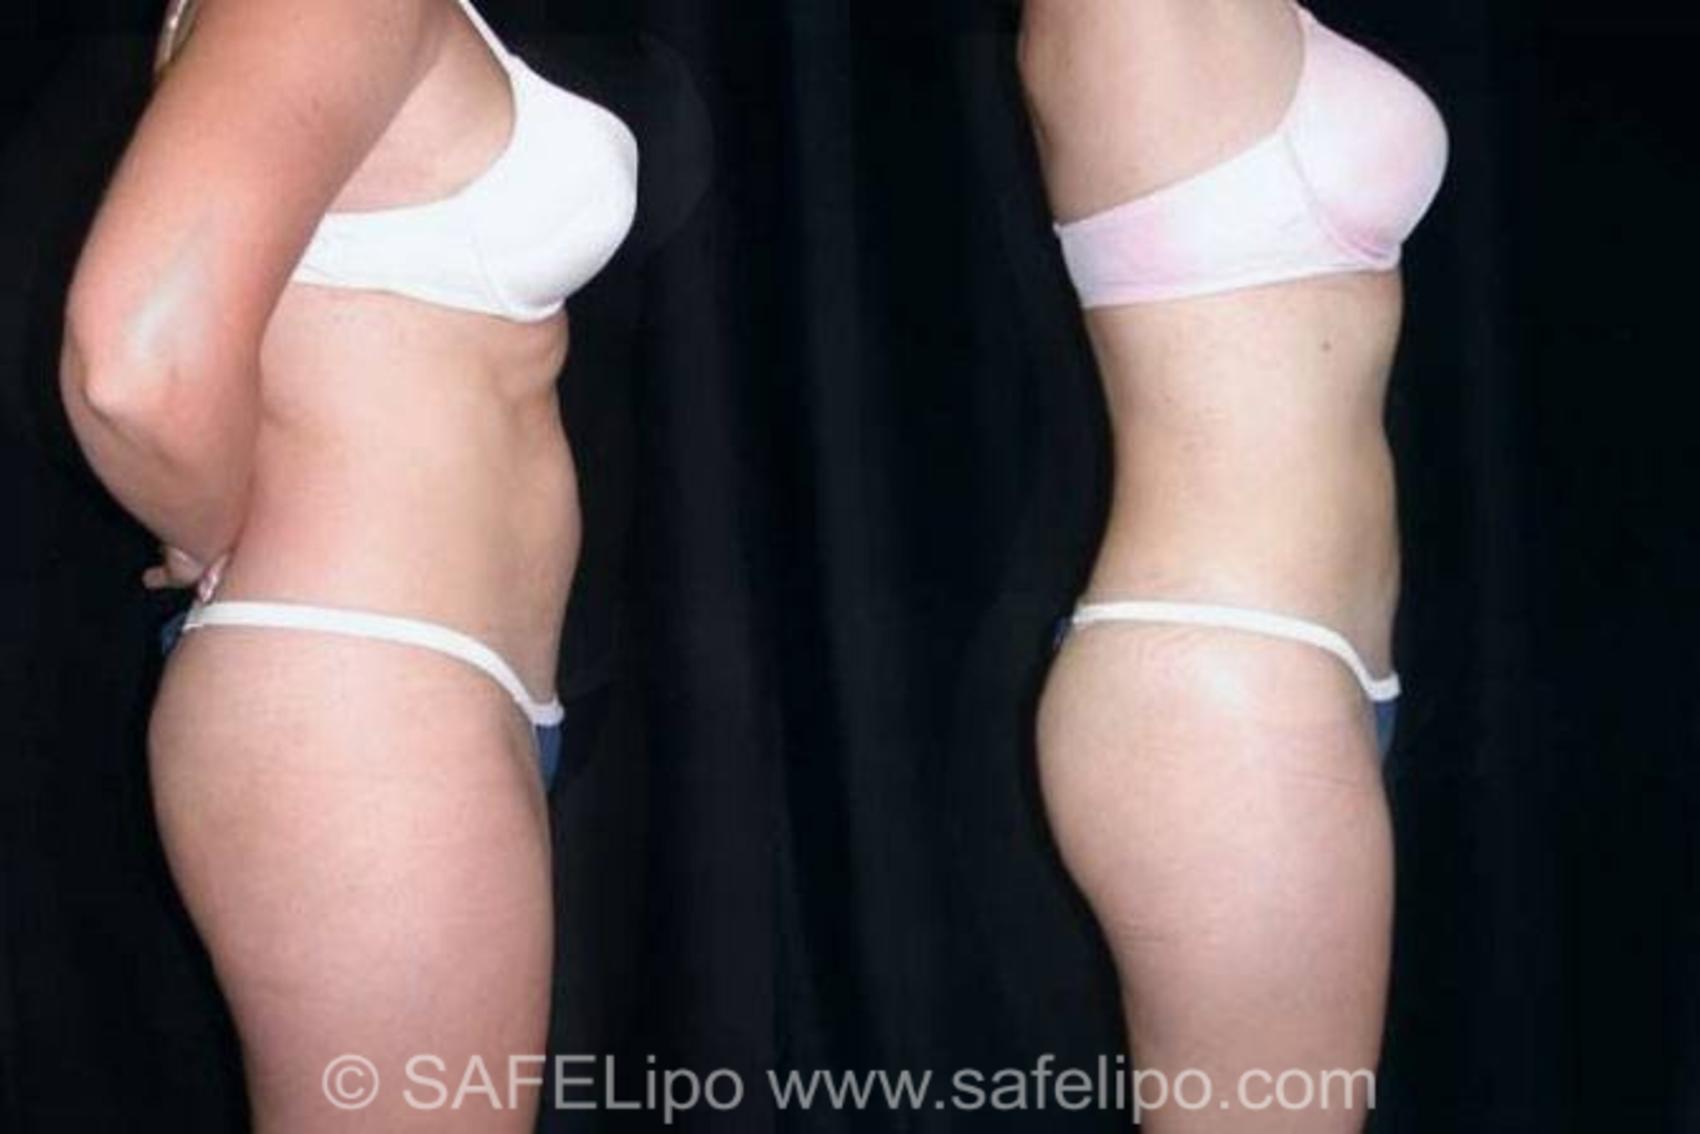 SAFELipoHD® Case 138 Before & After View #3 | SAFELipo®